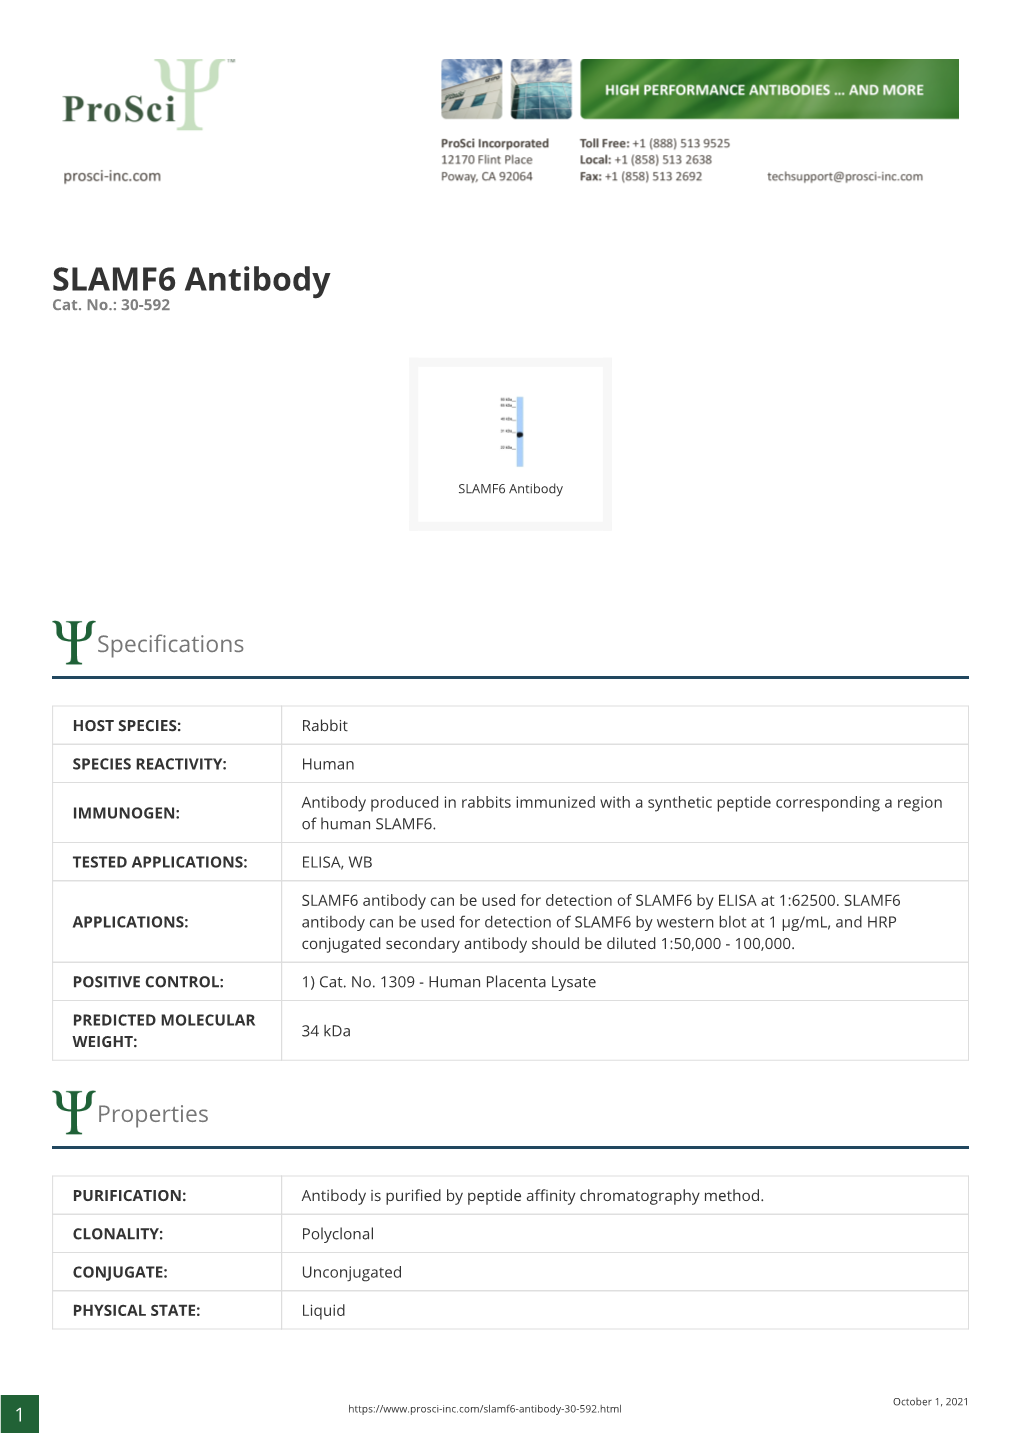 SLAMF6 Antibody Cat